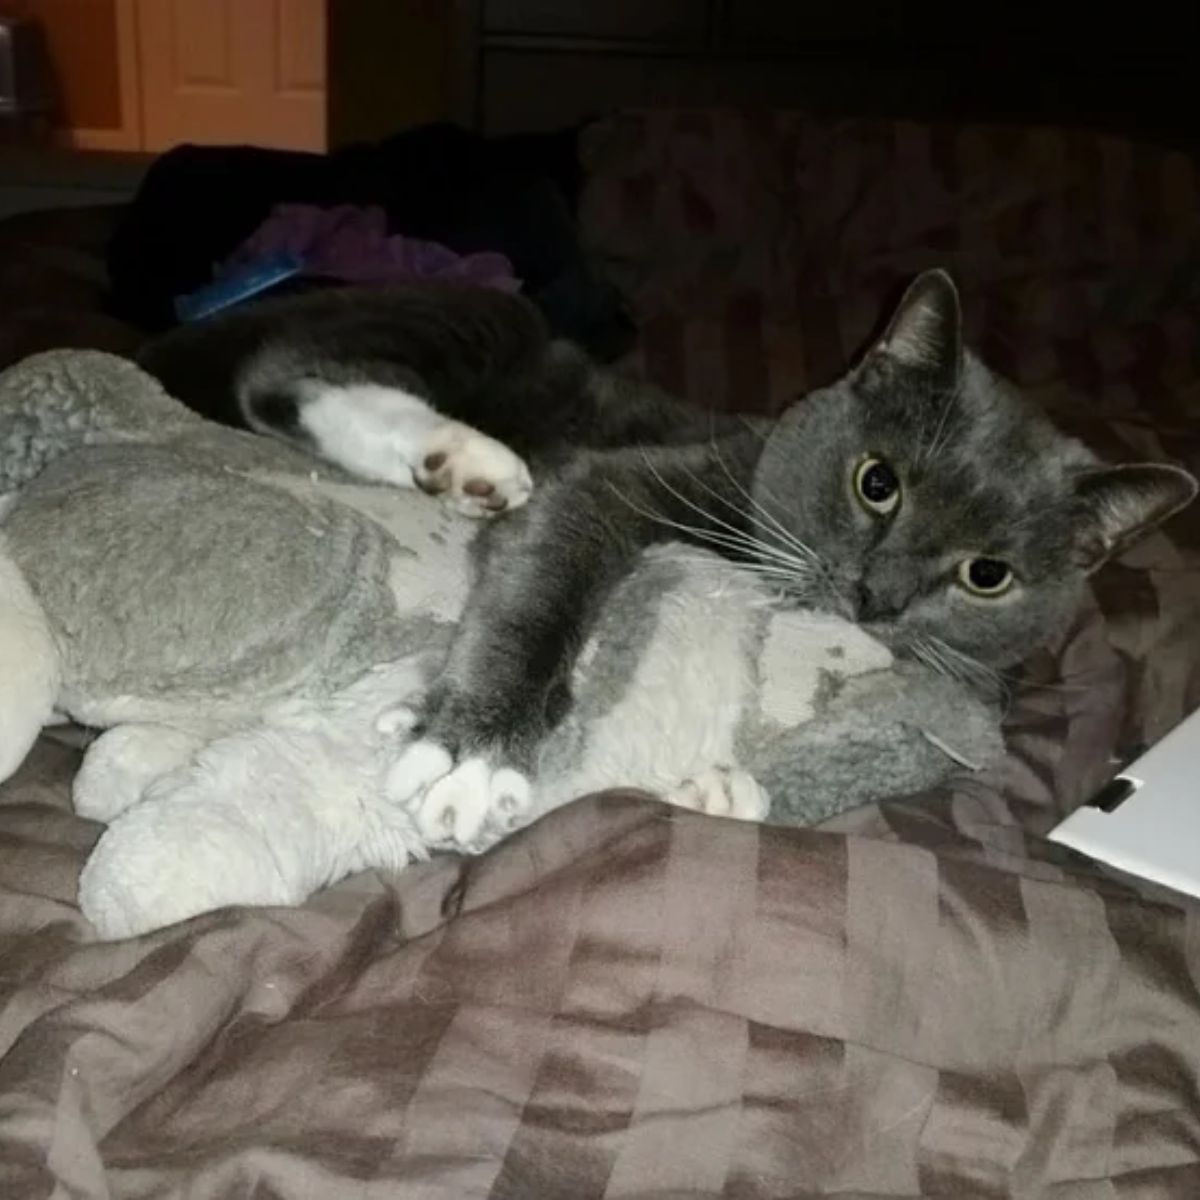 cat hugging stuffed animal